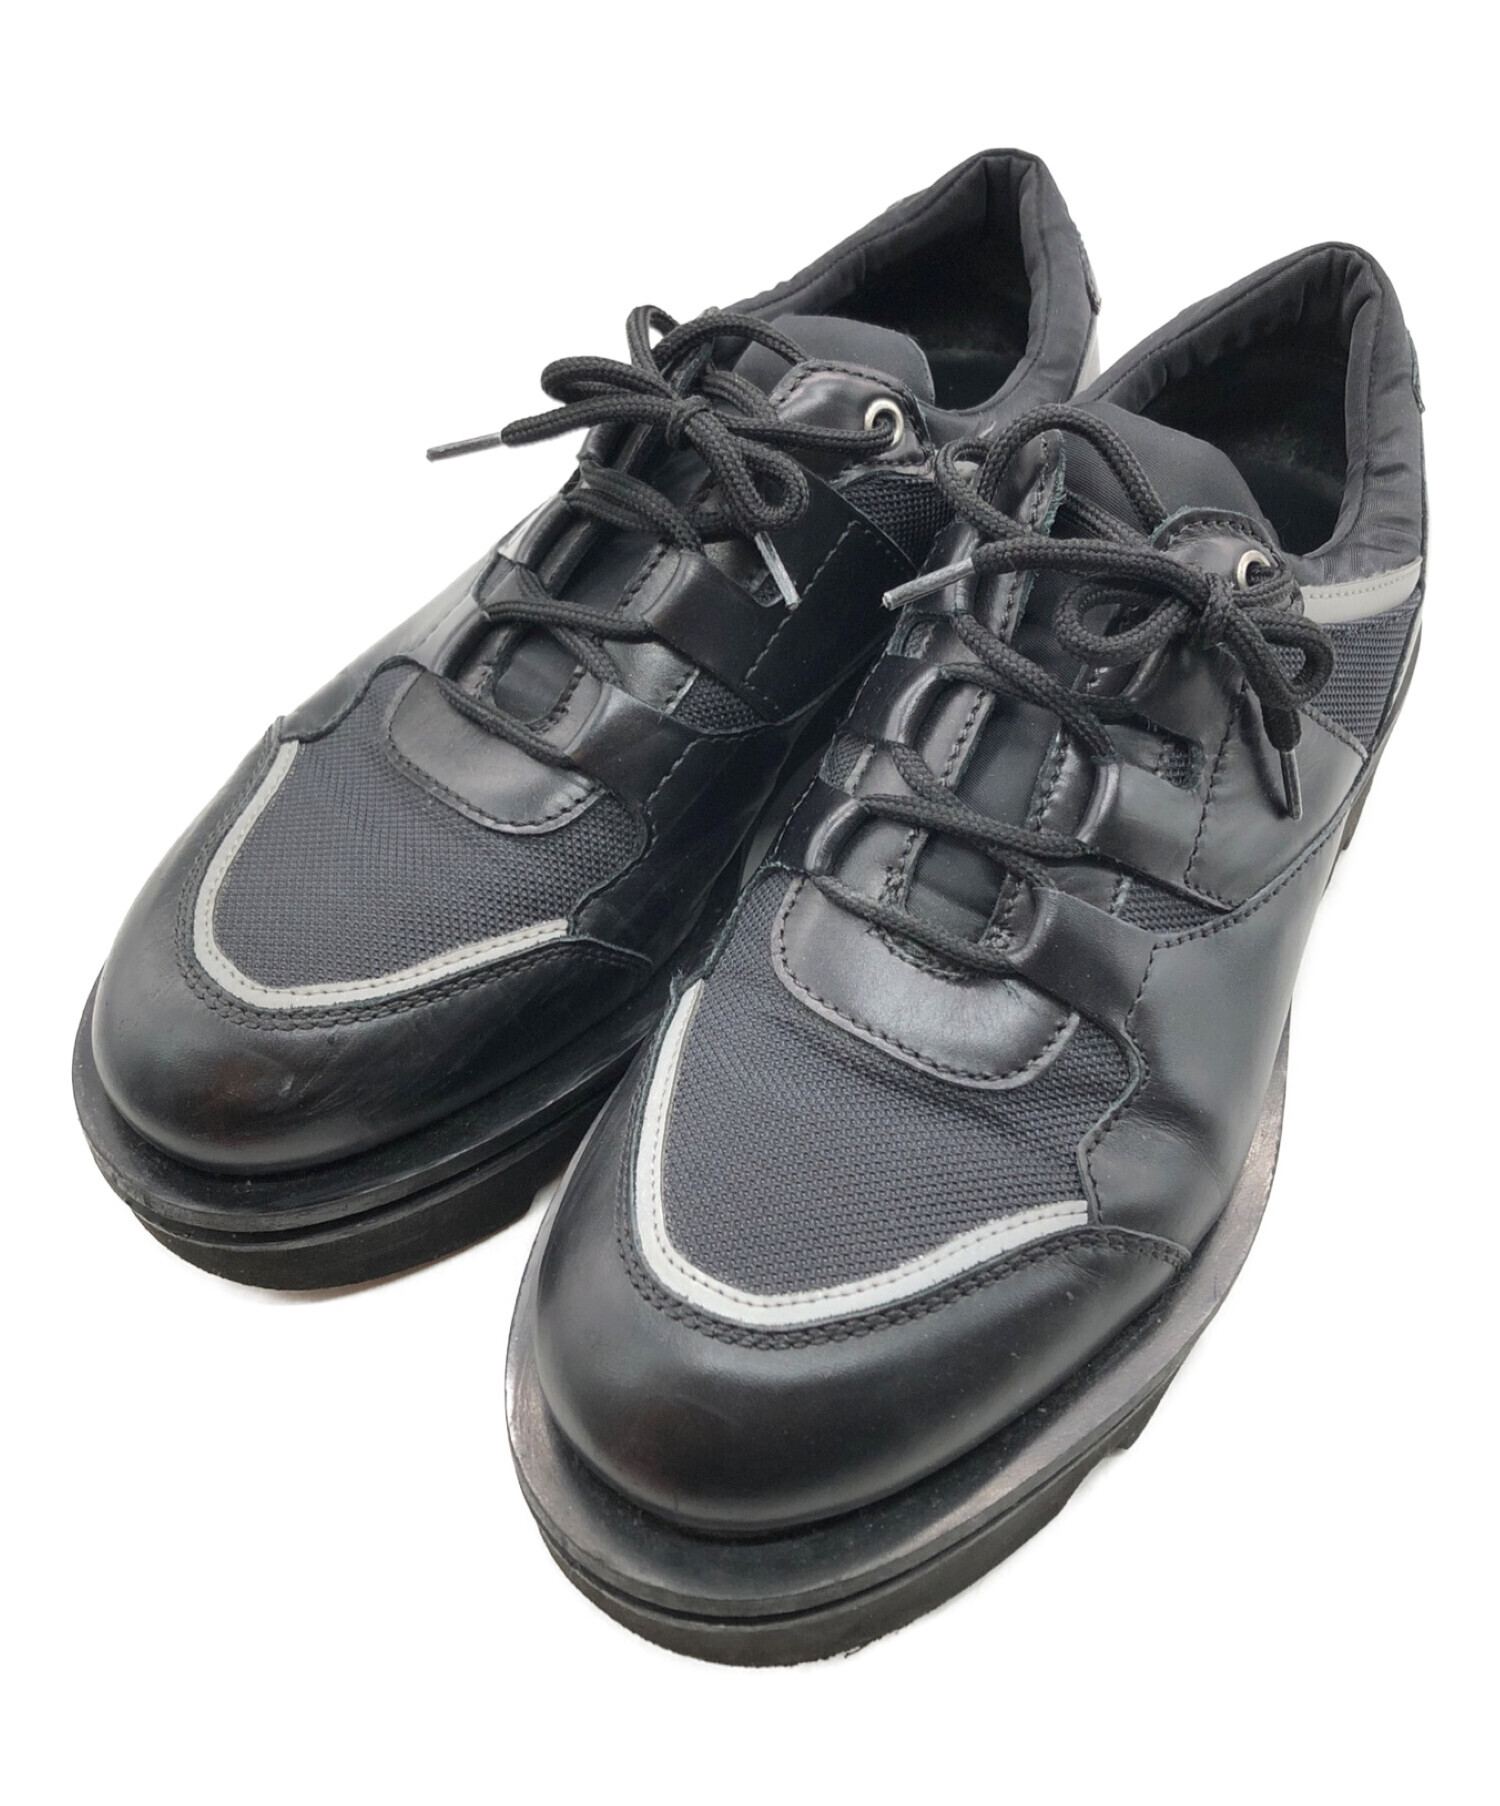 sacha garel mm5 leather shoes 27cm